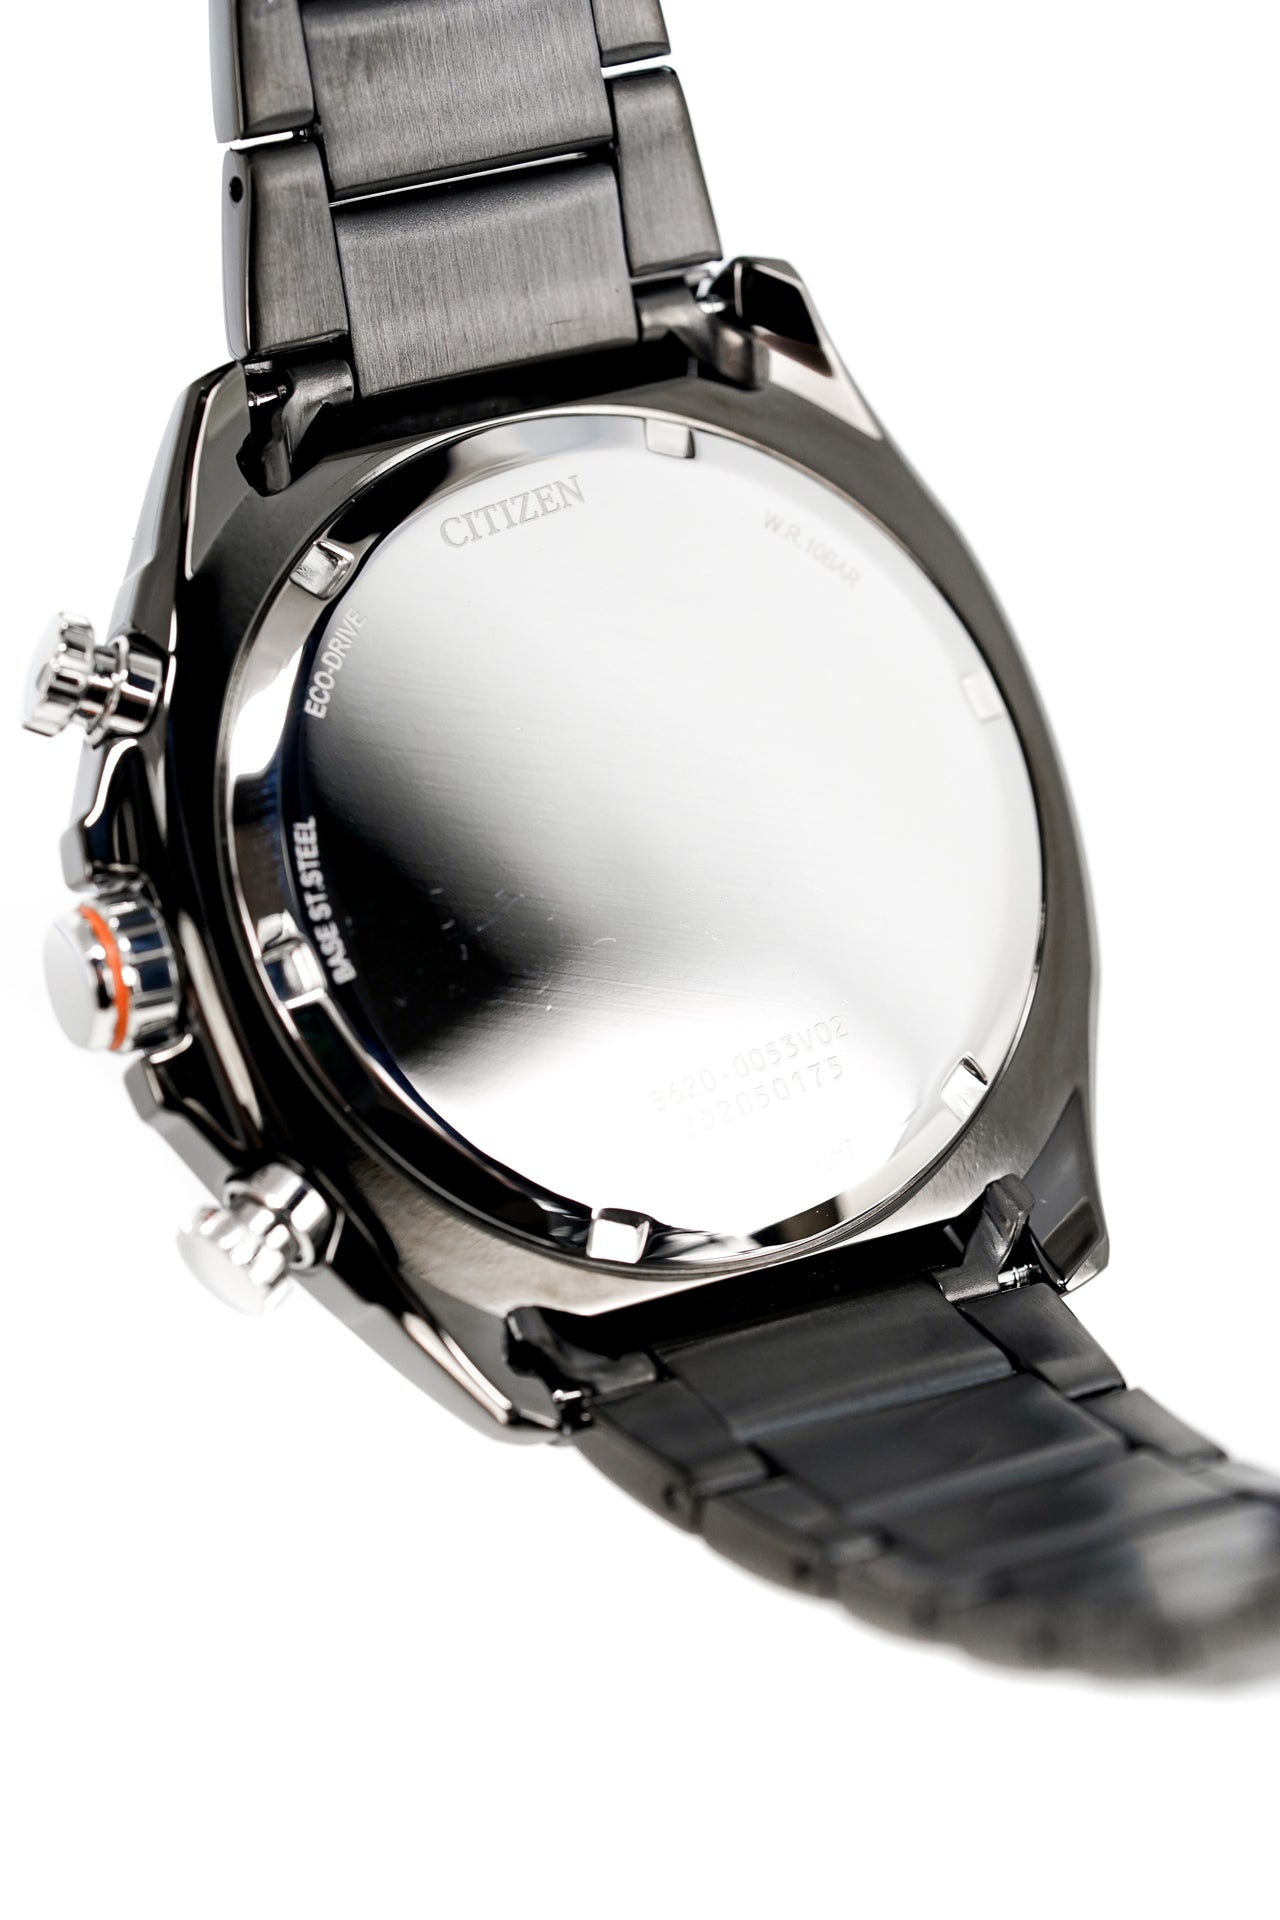 Citizen Eco-Drive Chronograph Black PVD Men's Watch CA4567-82H